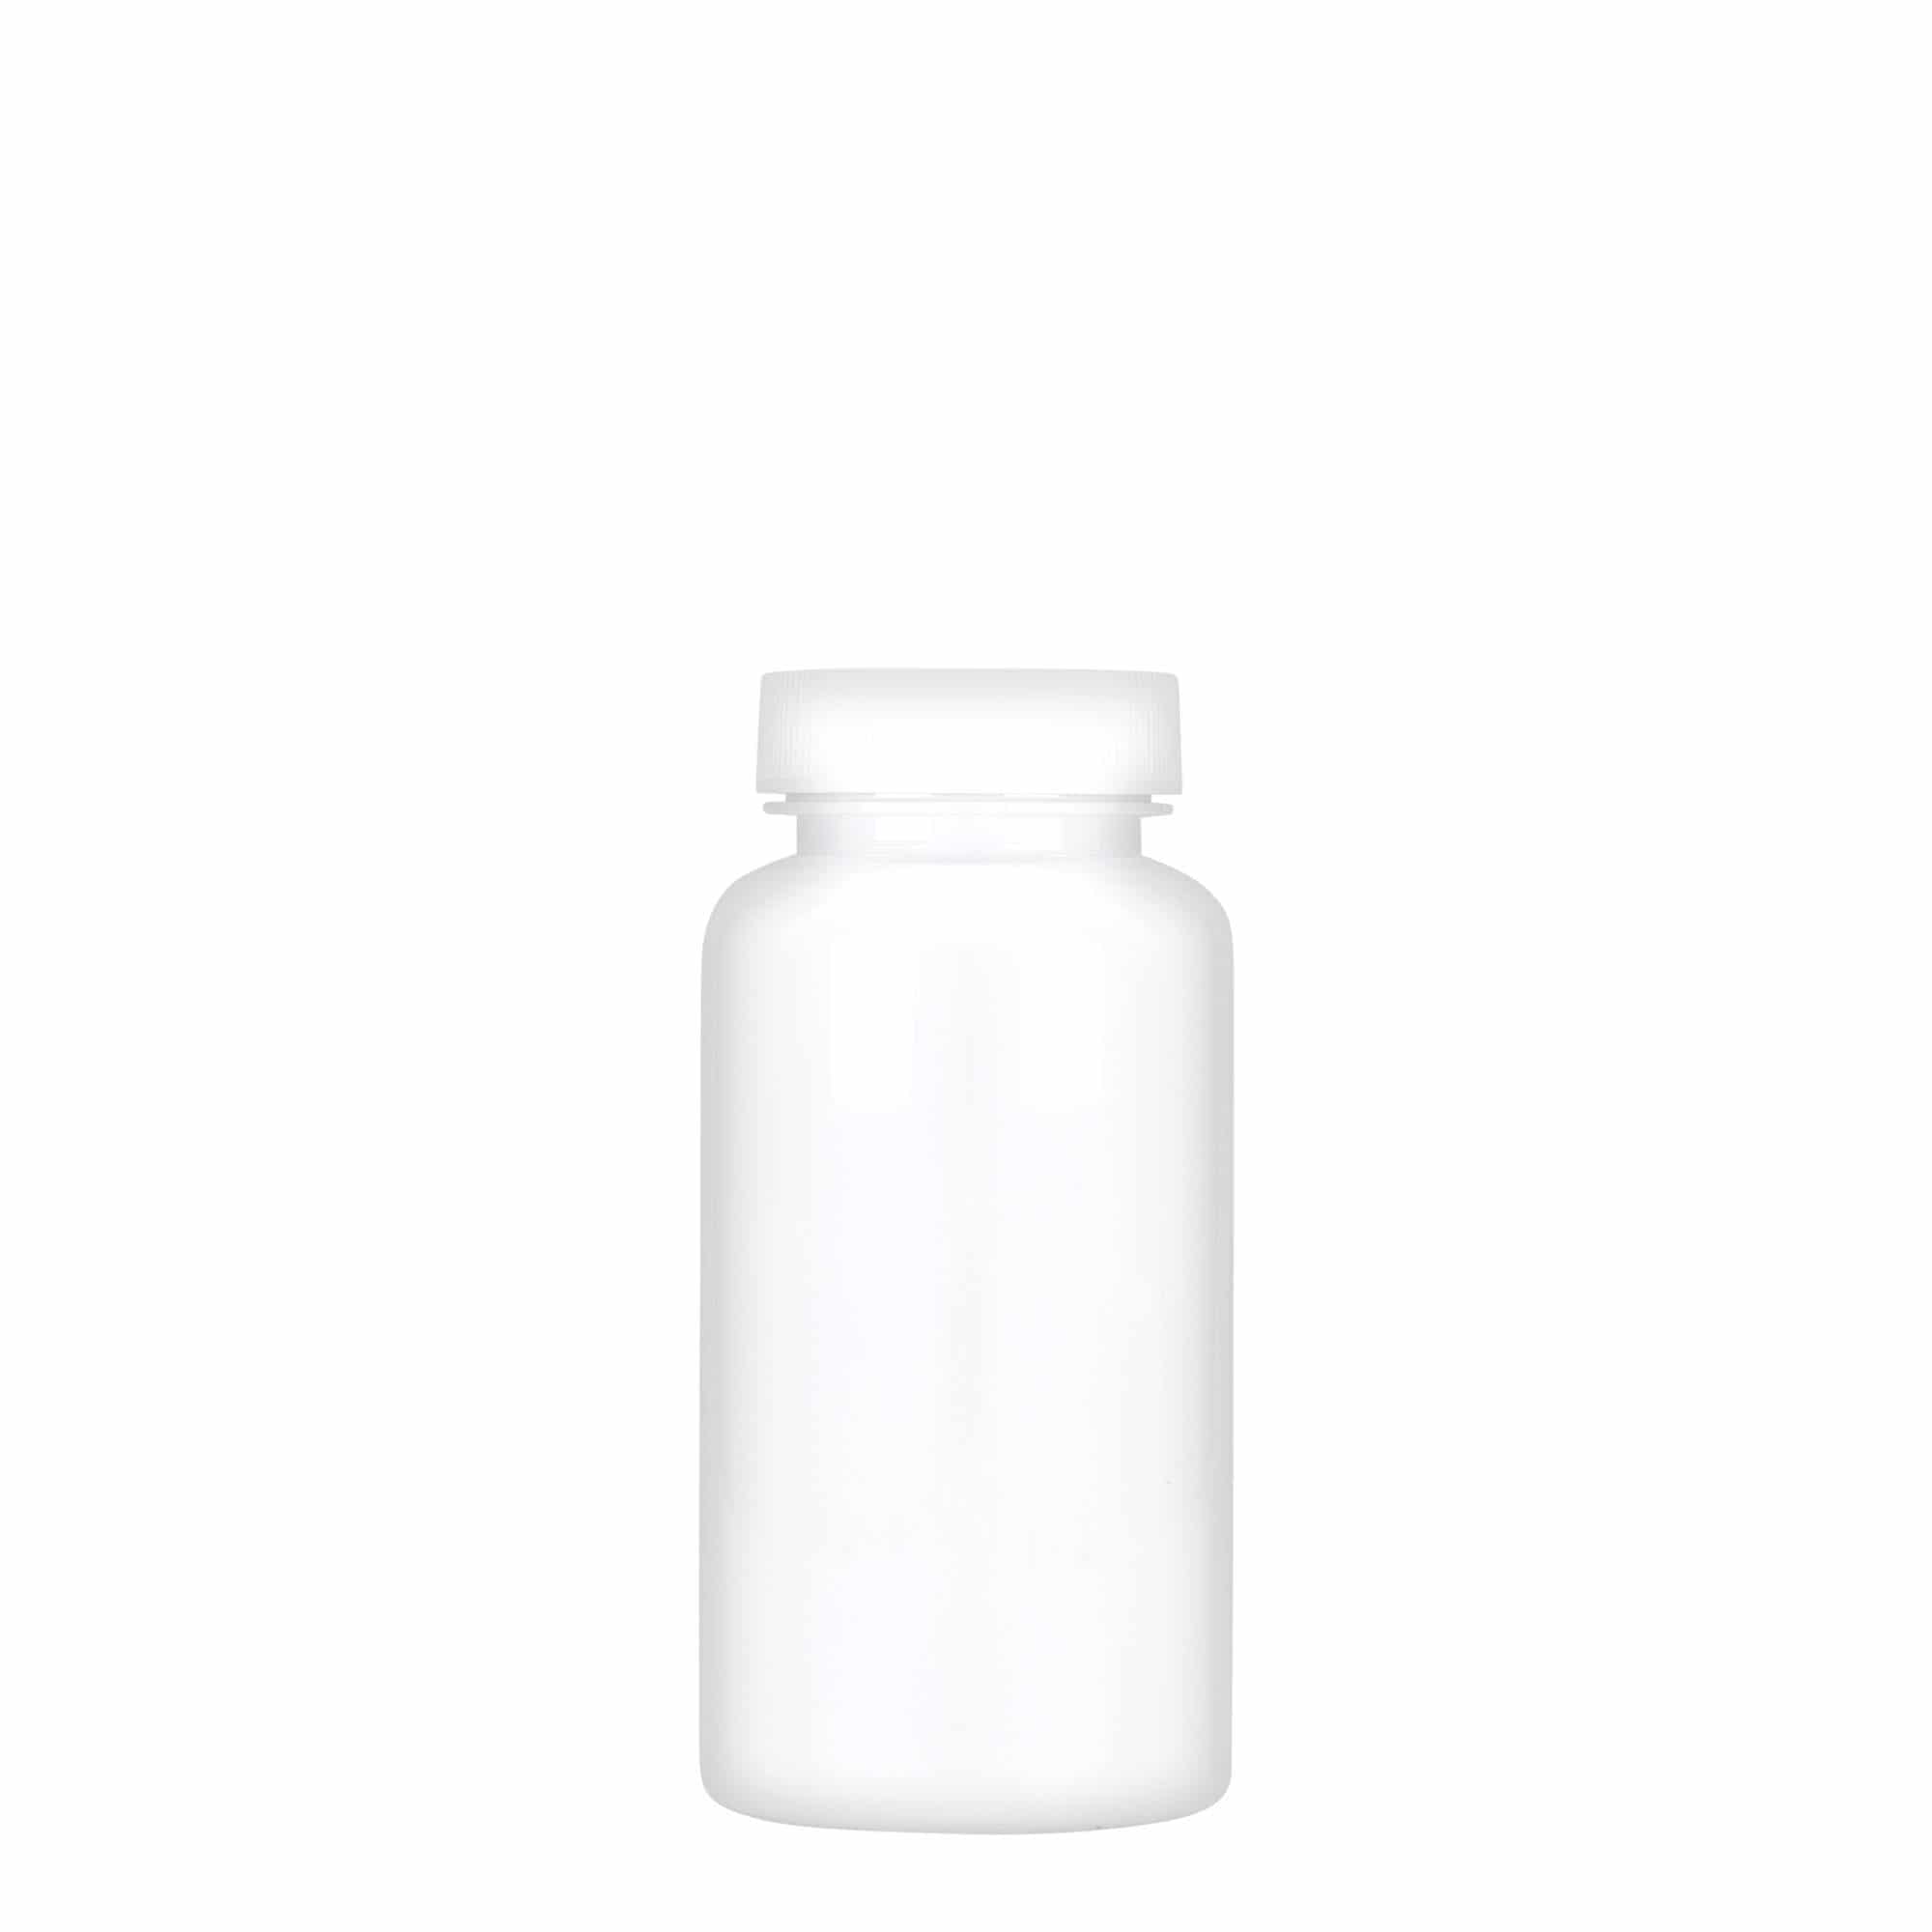 PET dóza 150 ml, plast, bílá, uzávěr: GPI 38/400